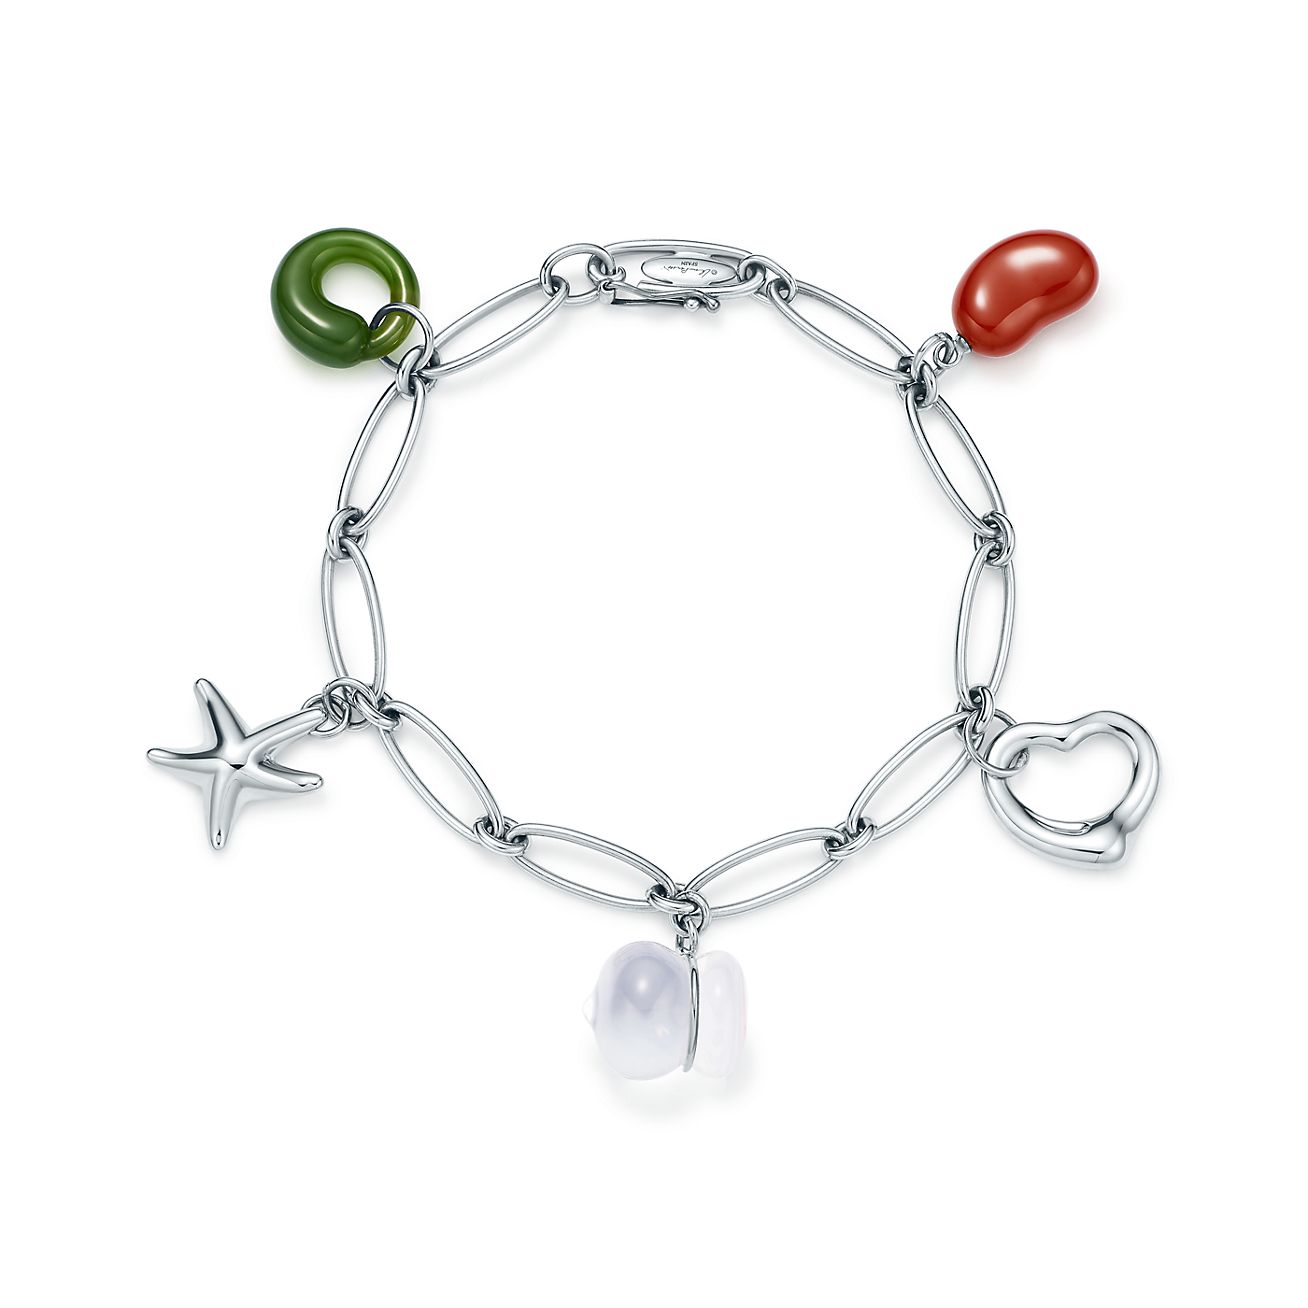 tiffany & co sterling silver charm bracelet